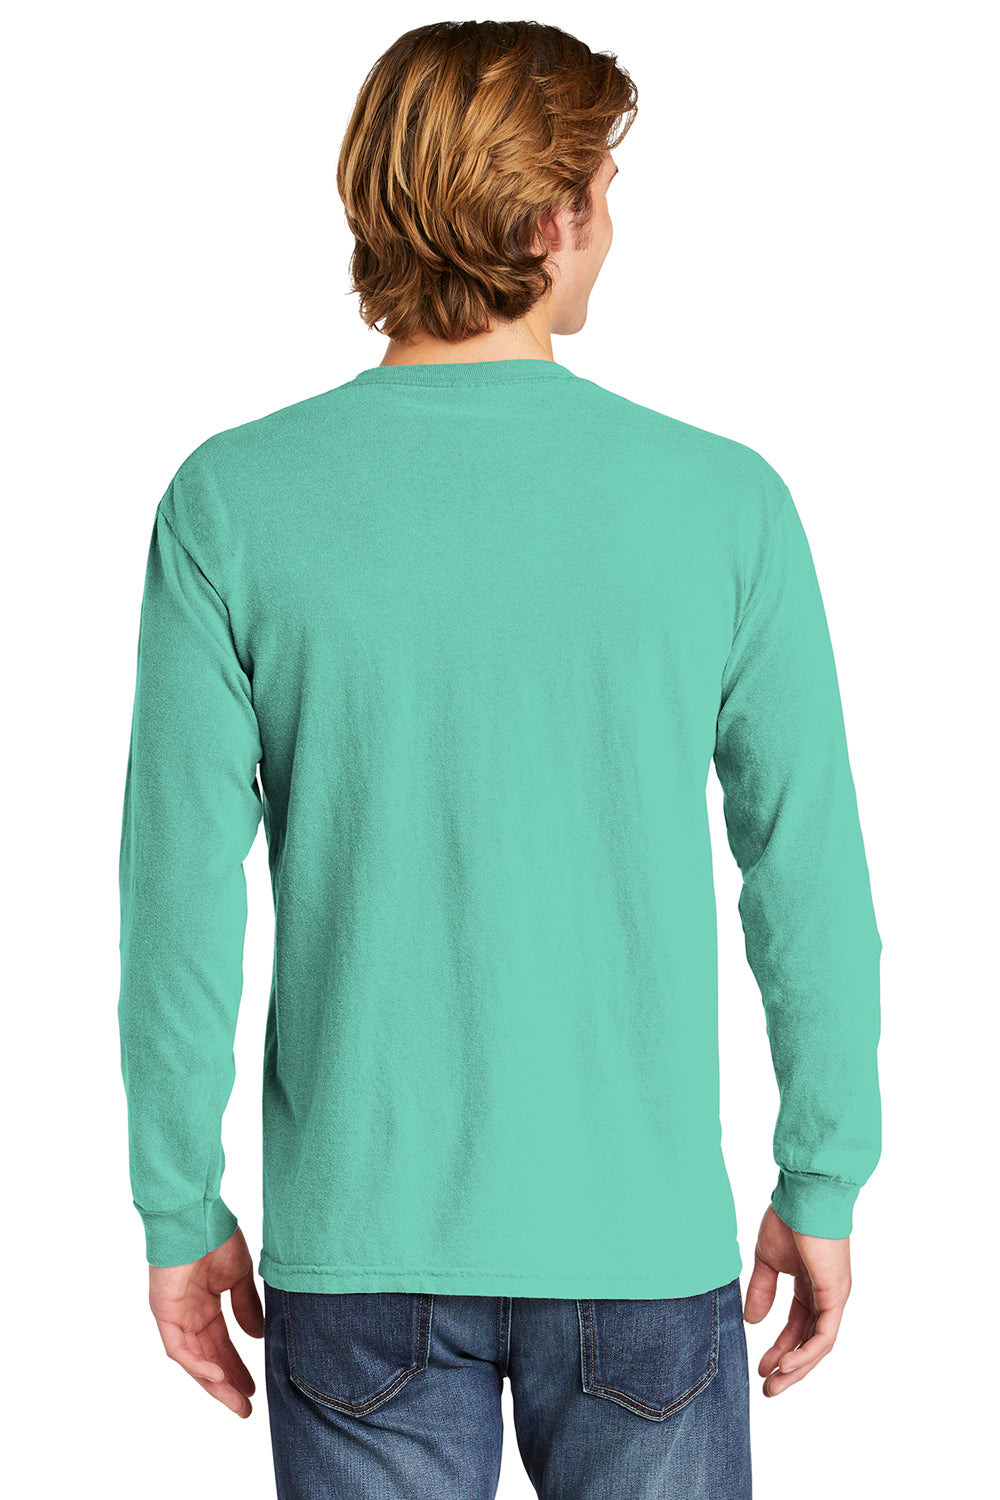 Comfort Colors 4410/C4410 Mens Long Sleeve Crewneck T-Shirt w/ Pocket Chalky Mint Green Back